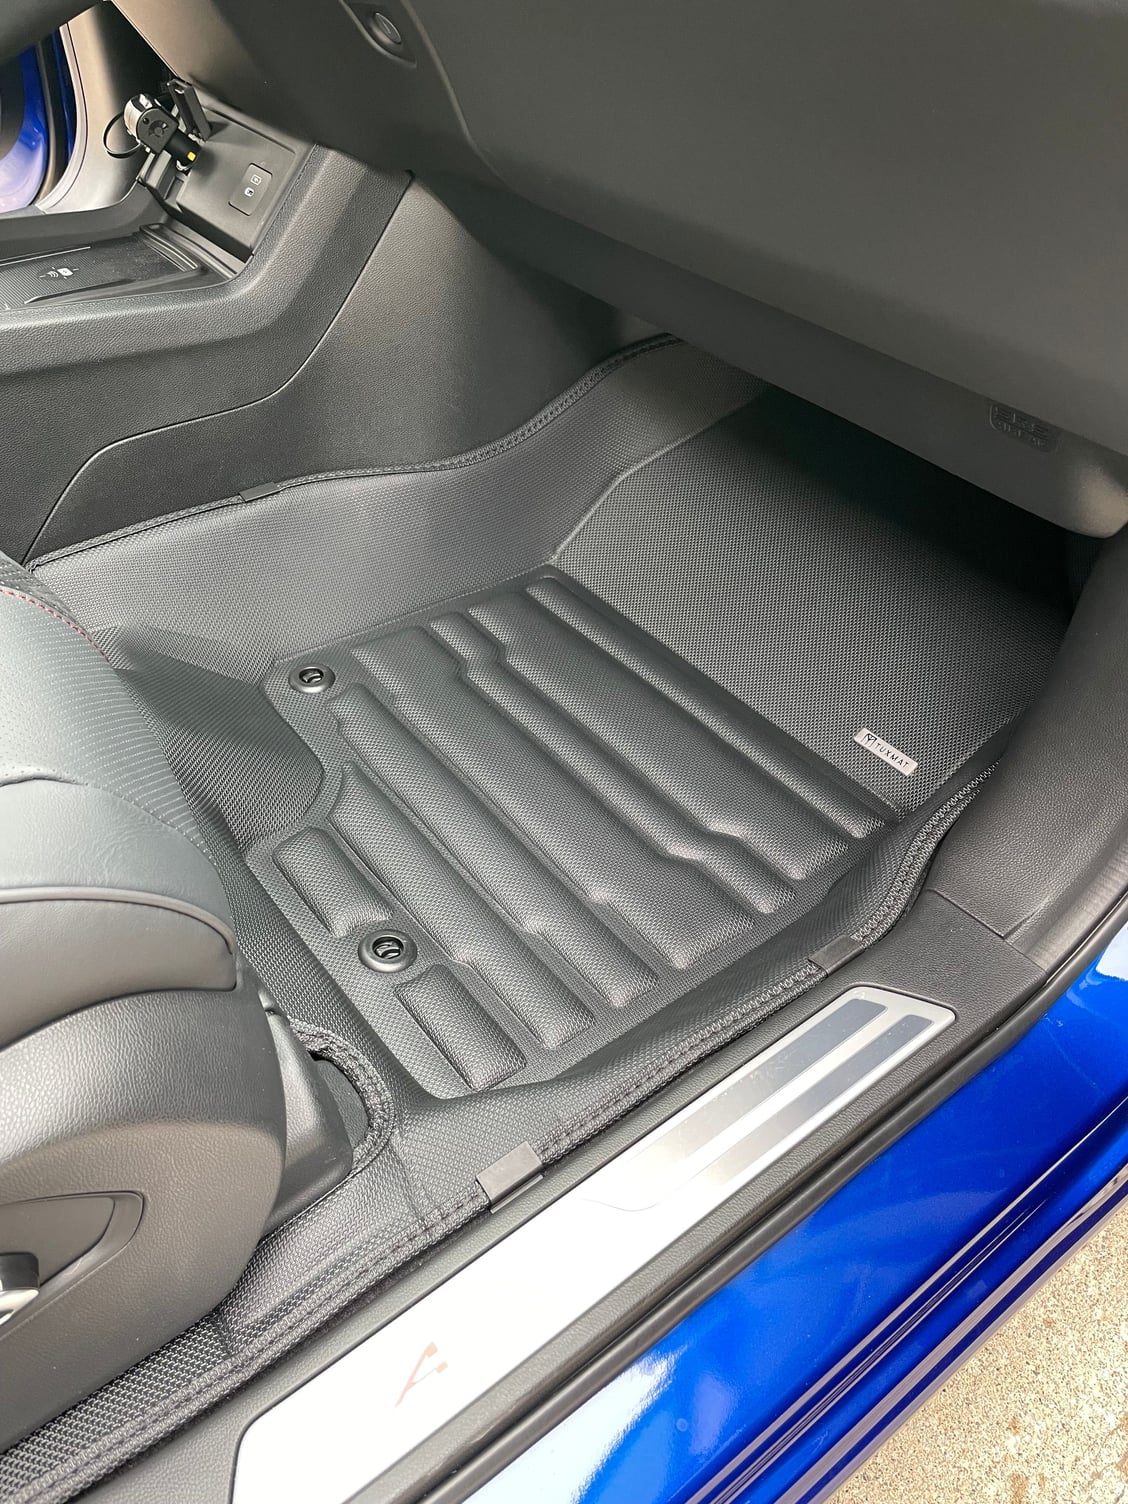 Genuine Acura TLX Floor Mats (All Weather) - Bernardi Parts Acura